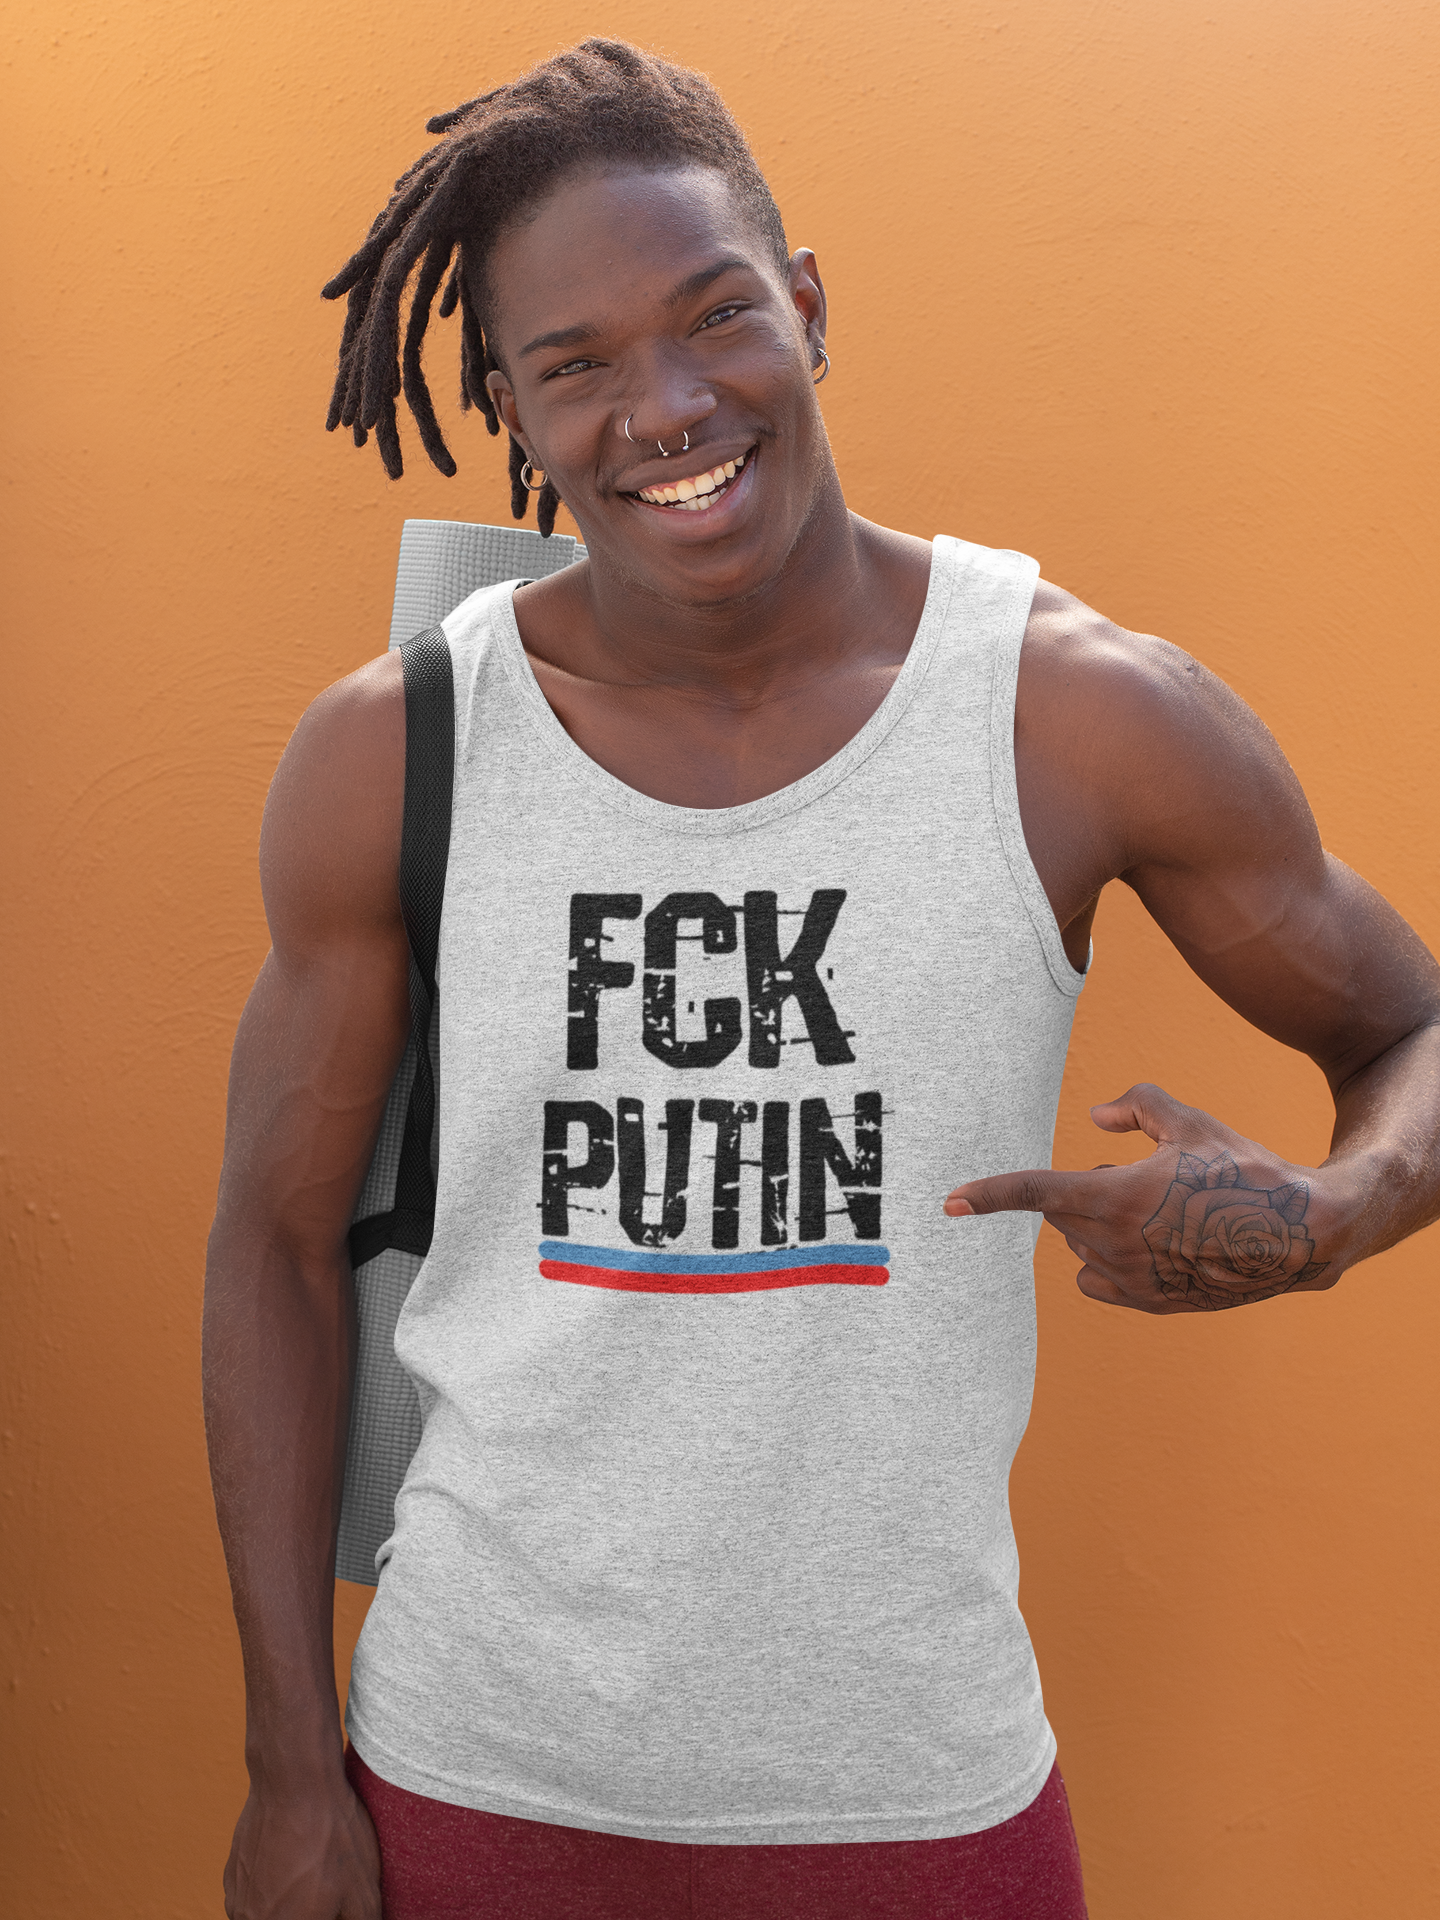 FCK Putin Tank Top Men